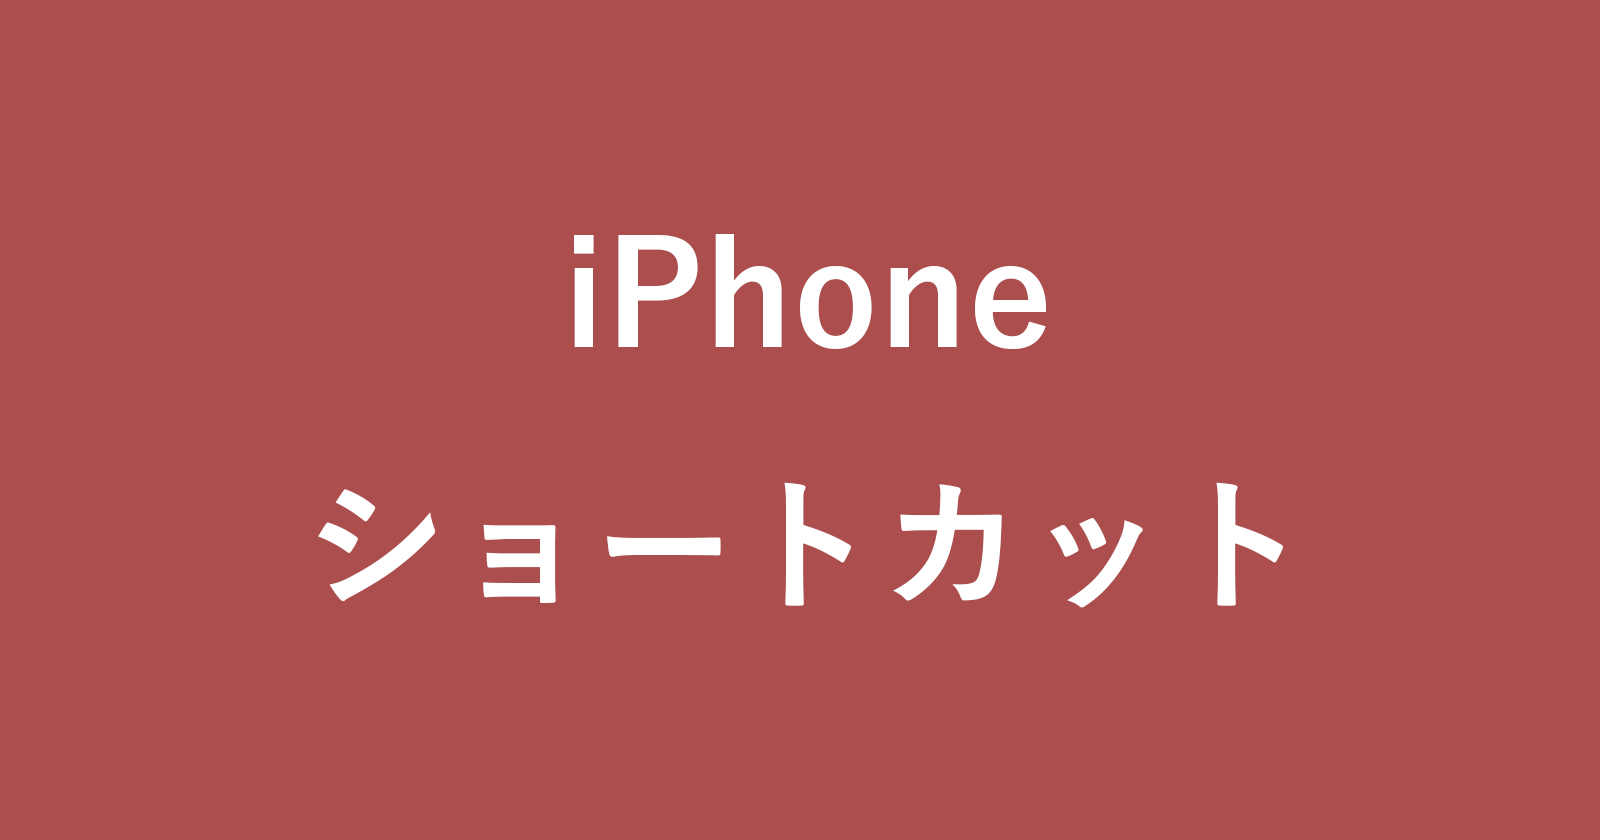 iphone triple shortcuts